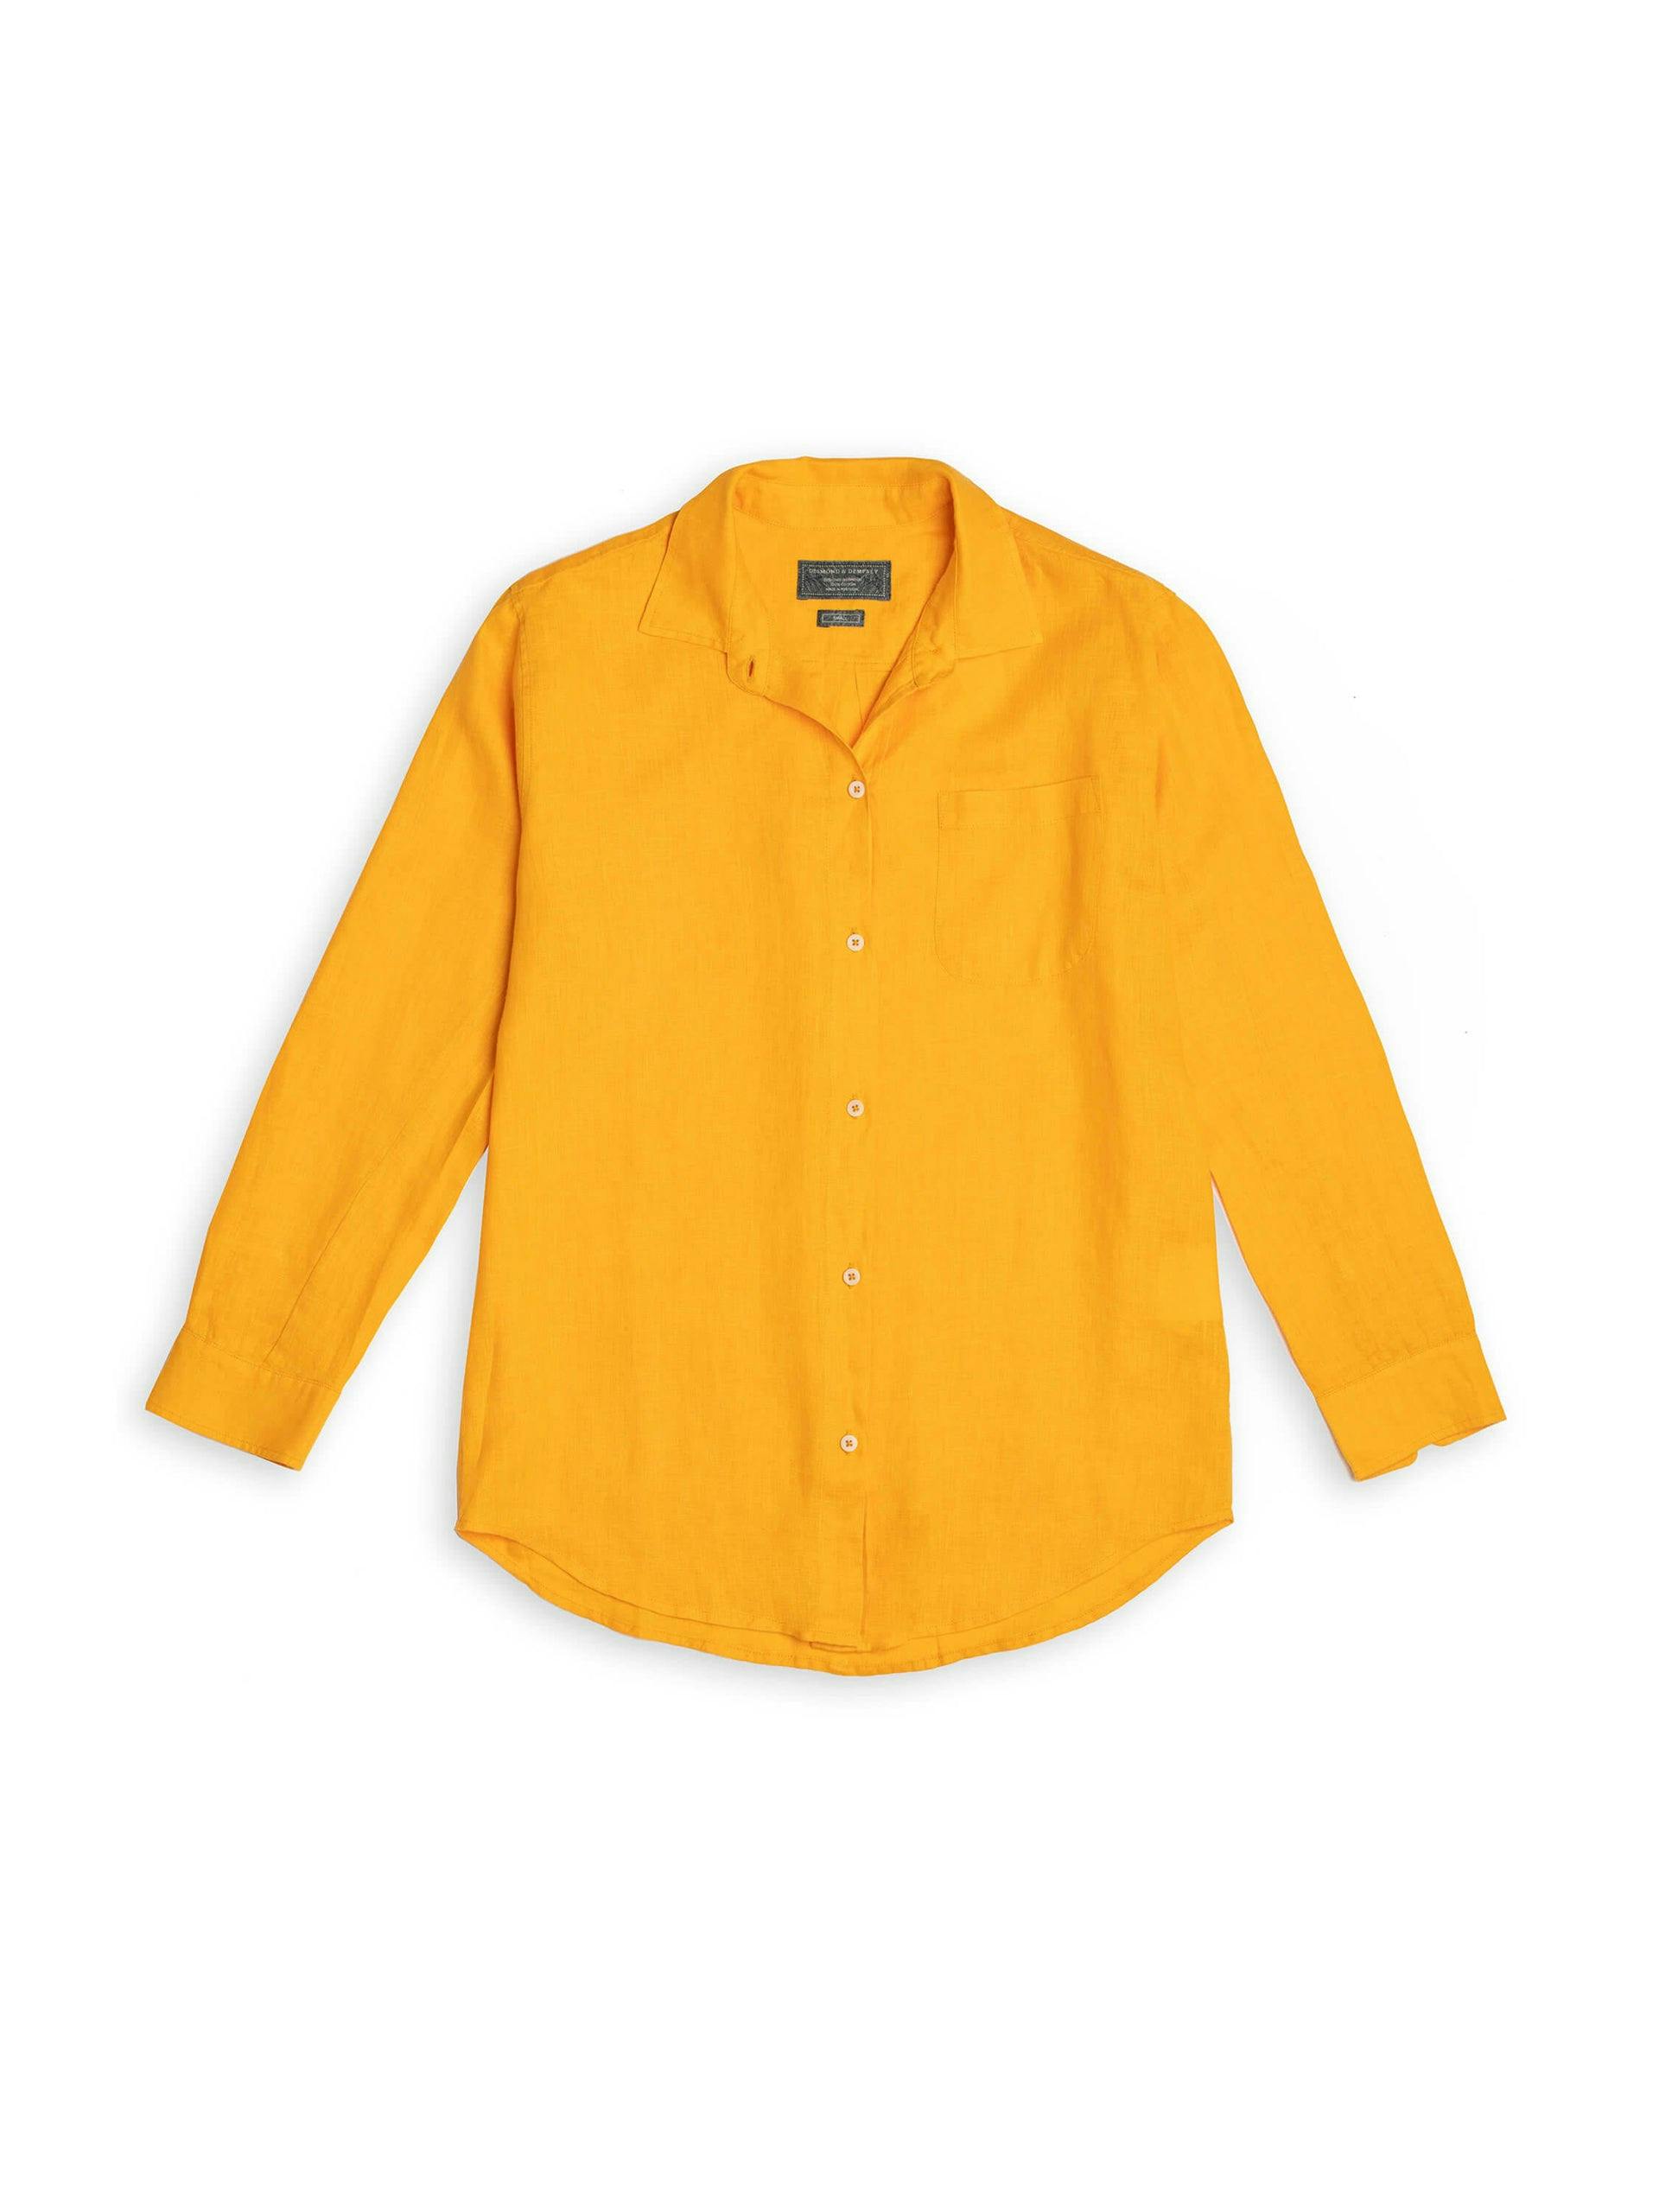 Tumeric yellow linen lounge shirt